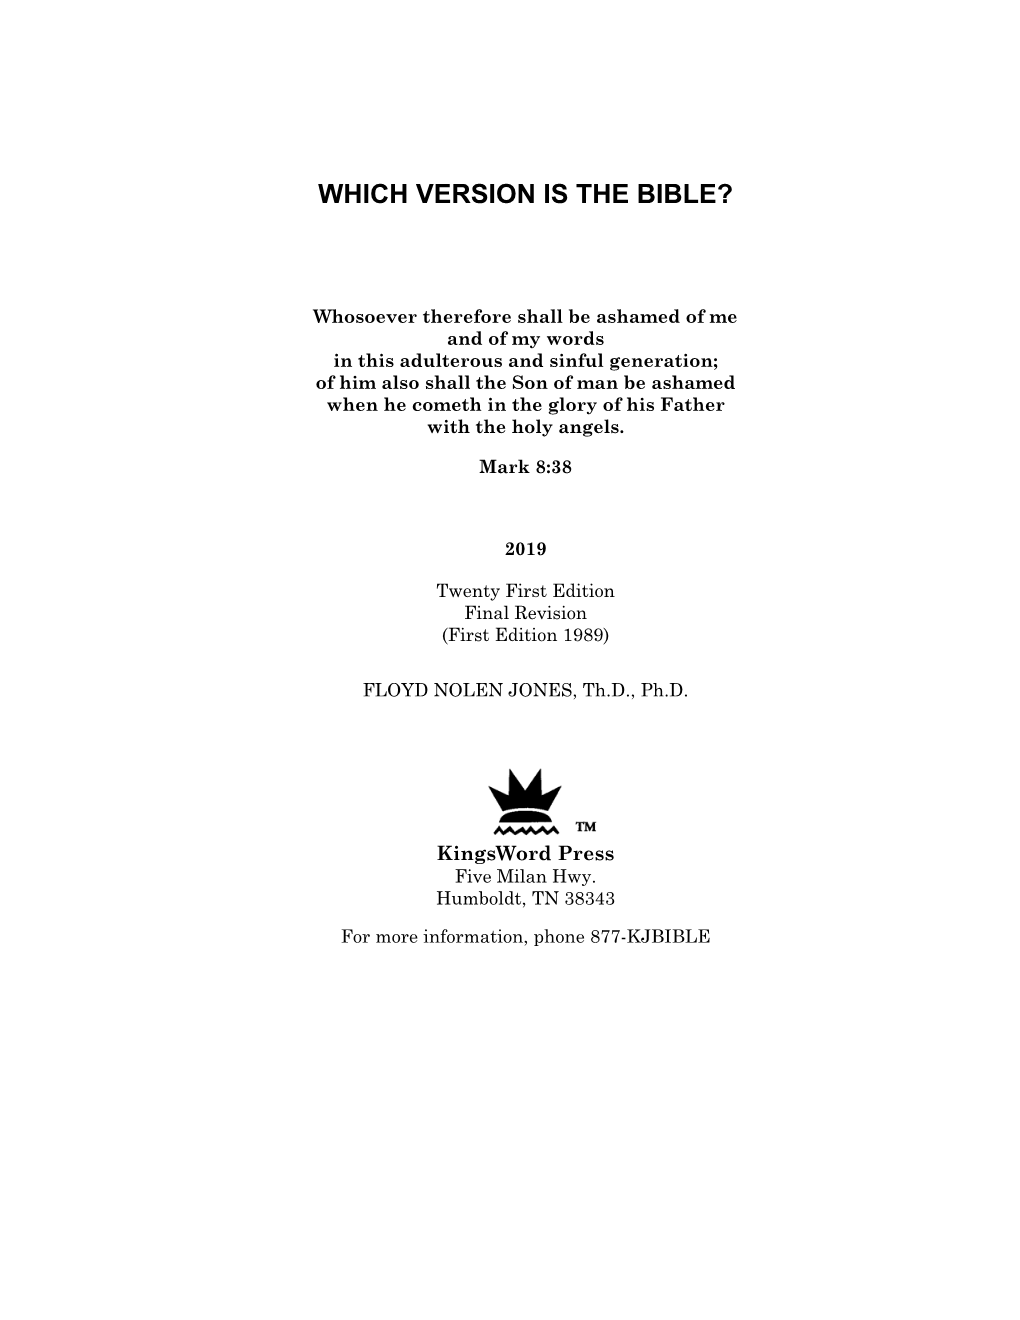 Which Version Is the Bible, Floyd Nolen Jones, Th.D., Ph.D. Published: 2019, 21St Edition